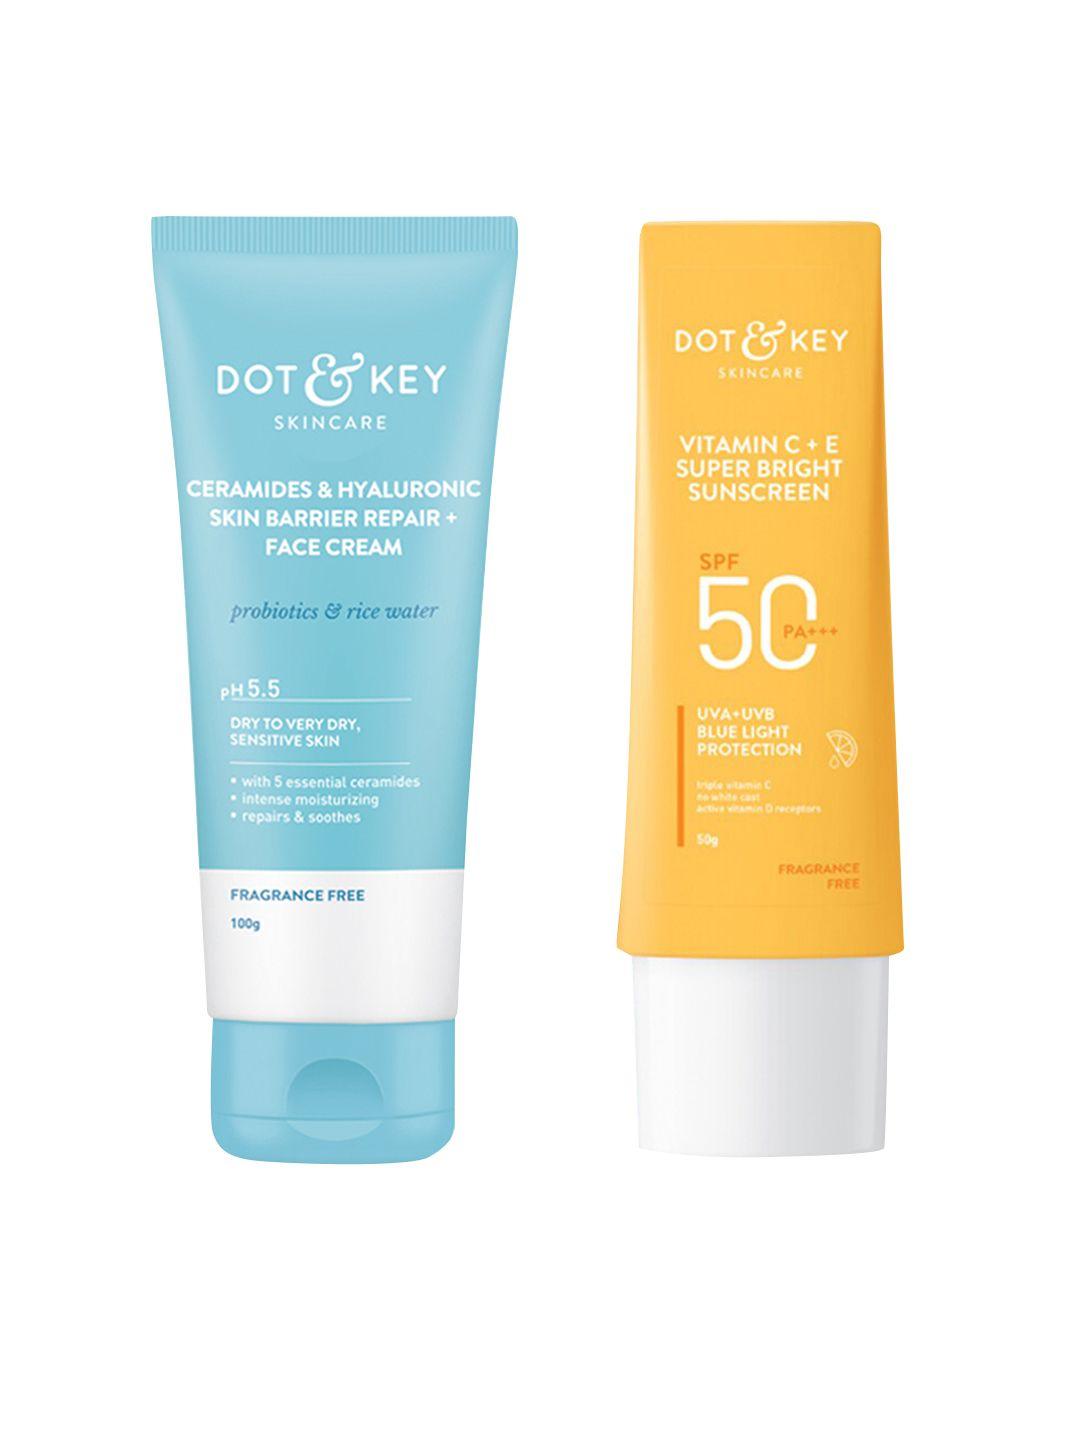 dot & key skin barrier repair+ face cream 100g & spf 50 super bright sunscreen 50g